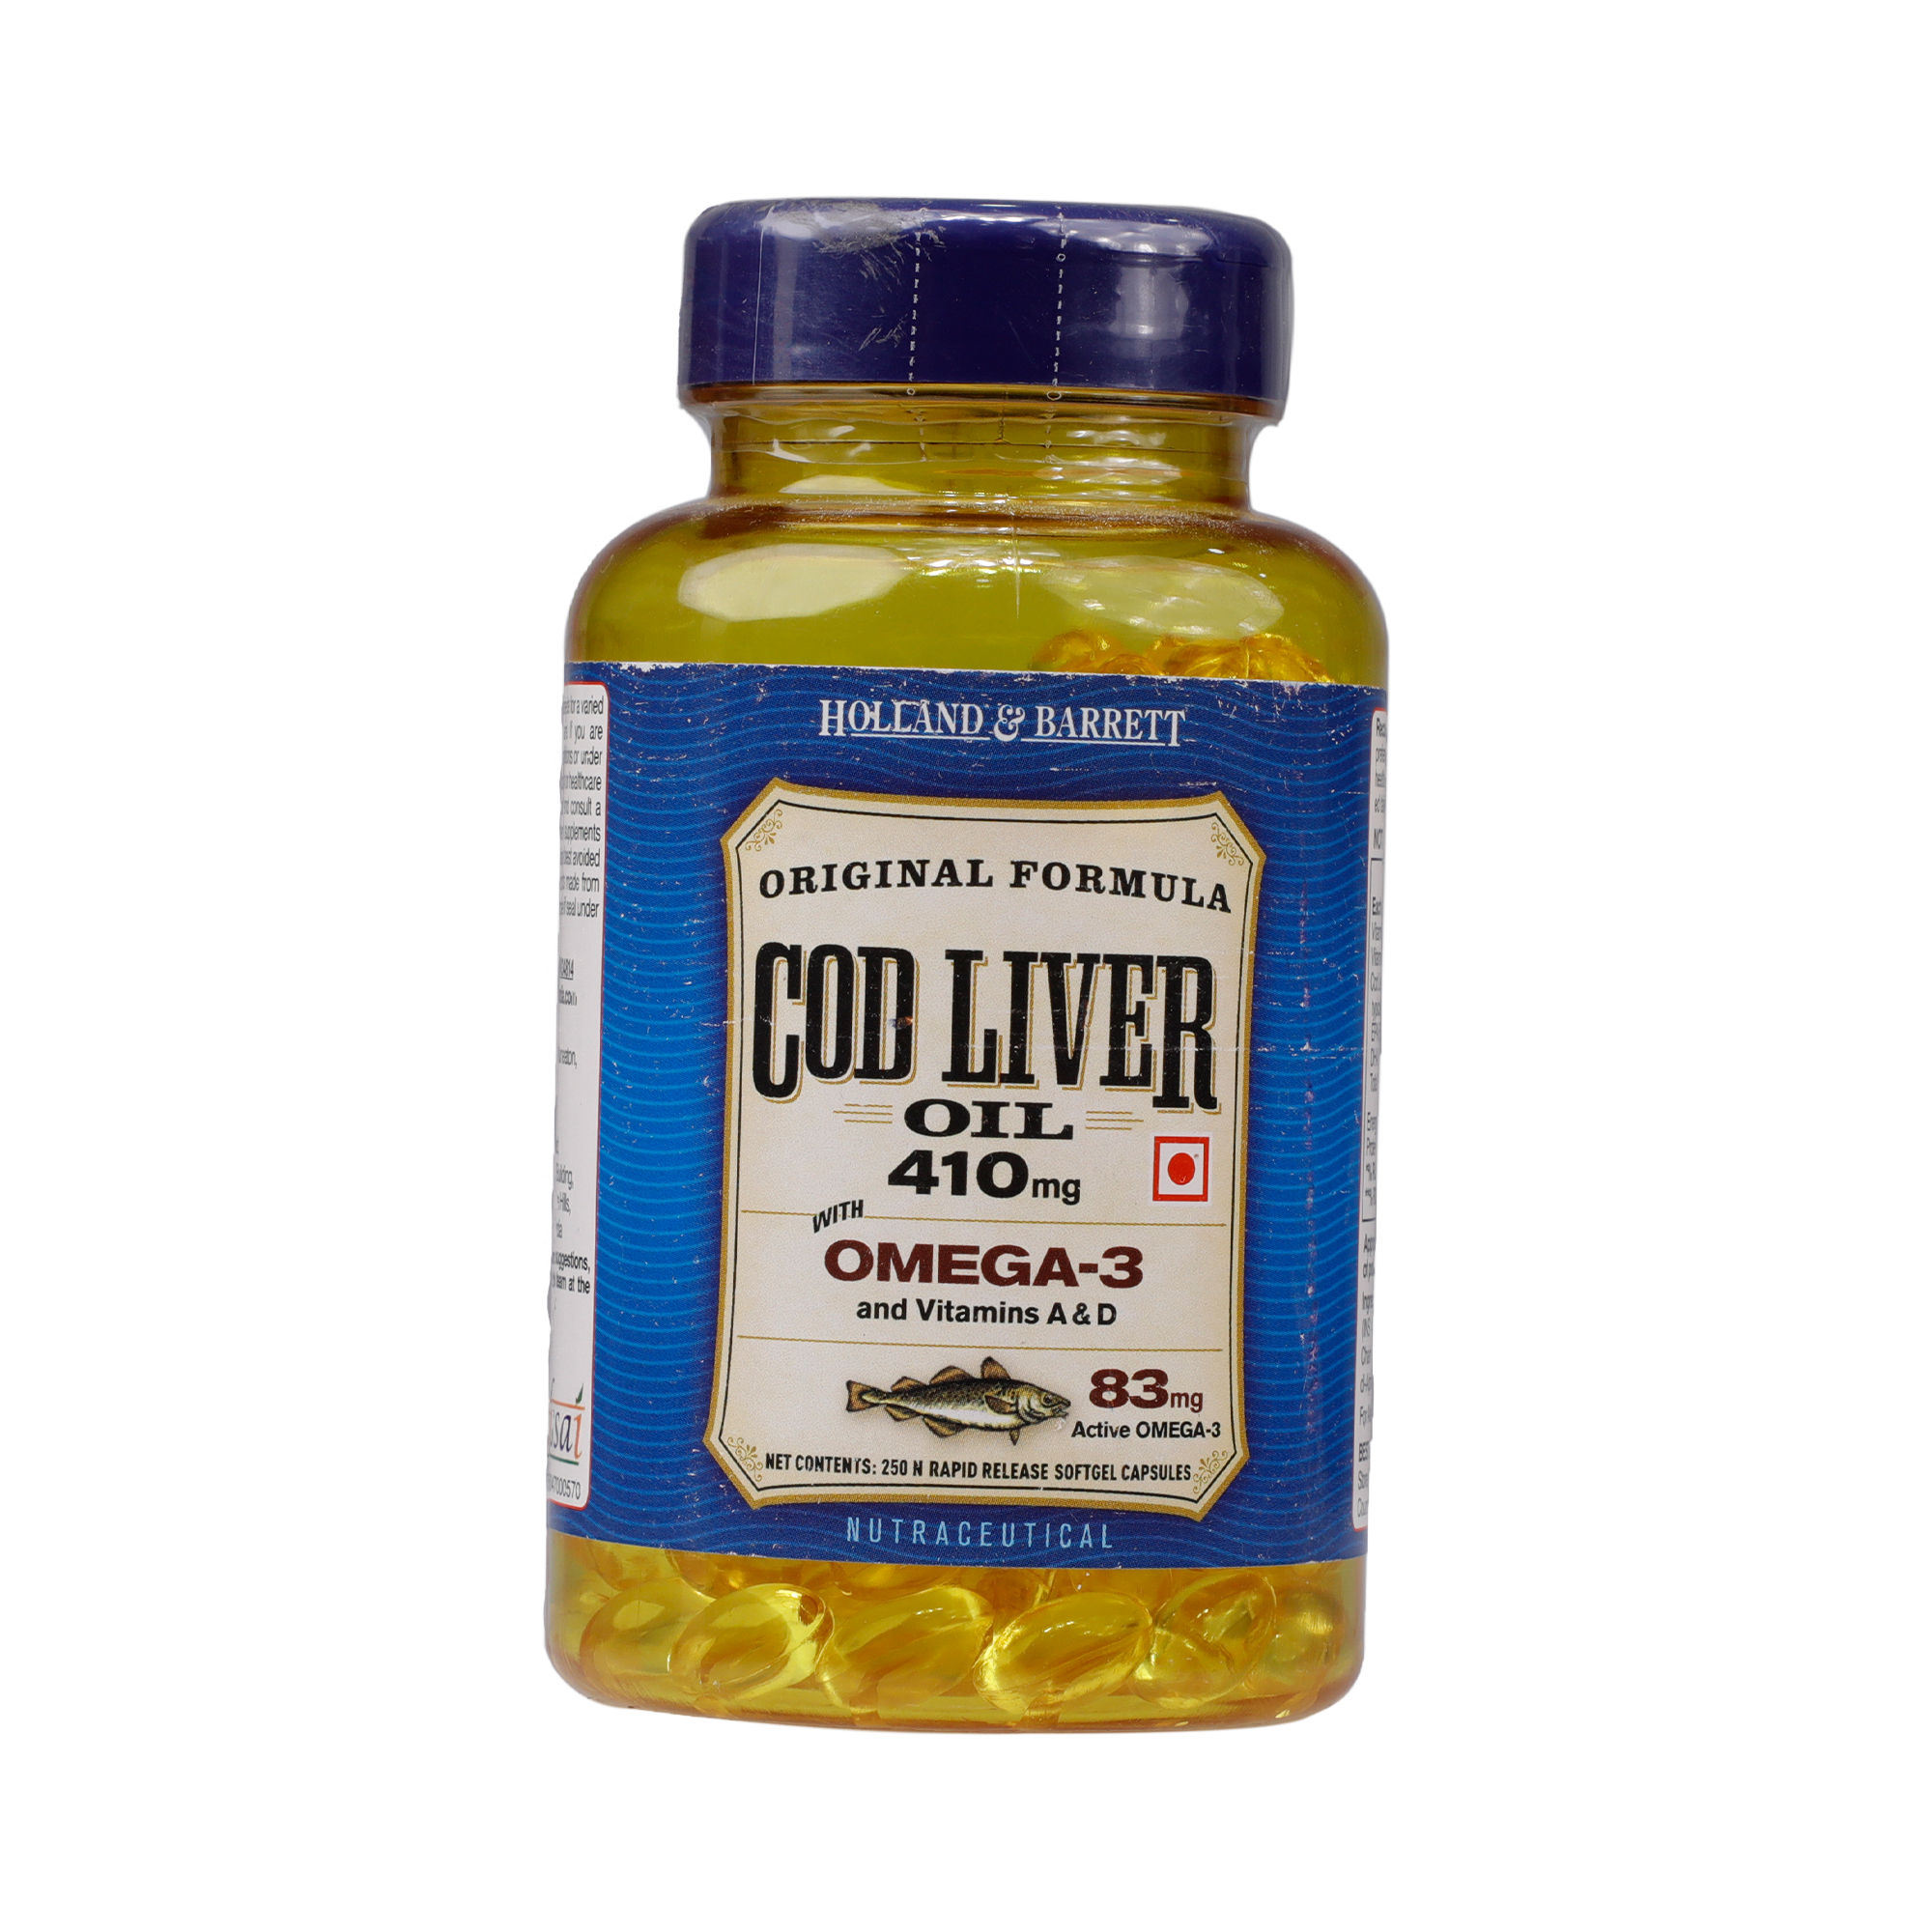 Buy Holland & Barrett Cod Liver Oil 410 mg, 250 Capsules Online